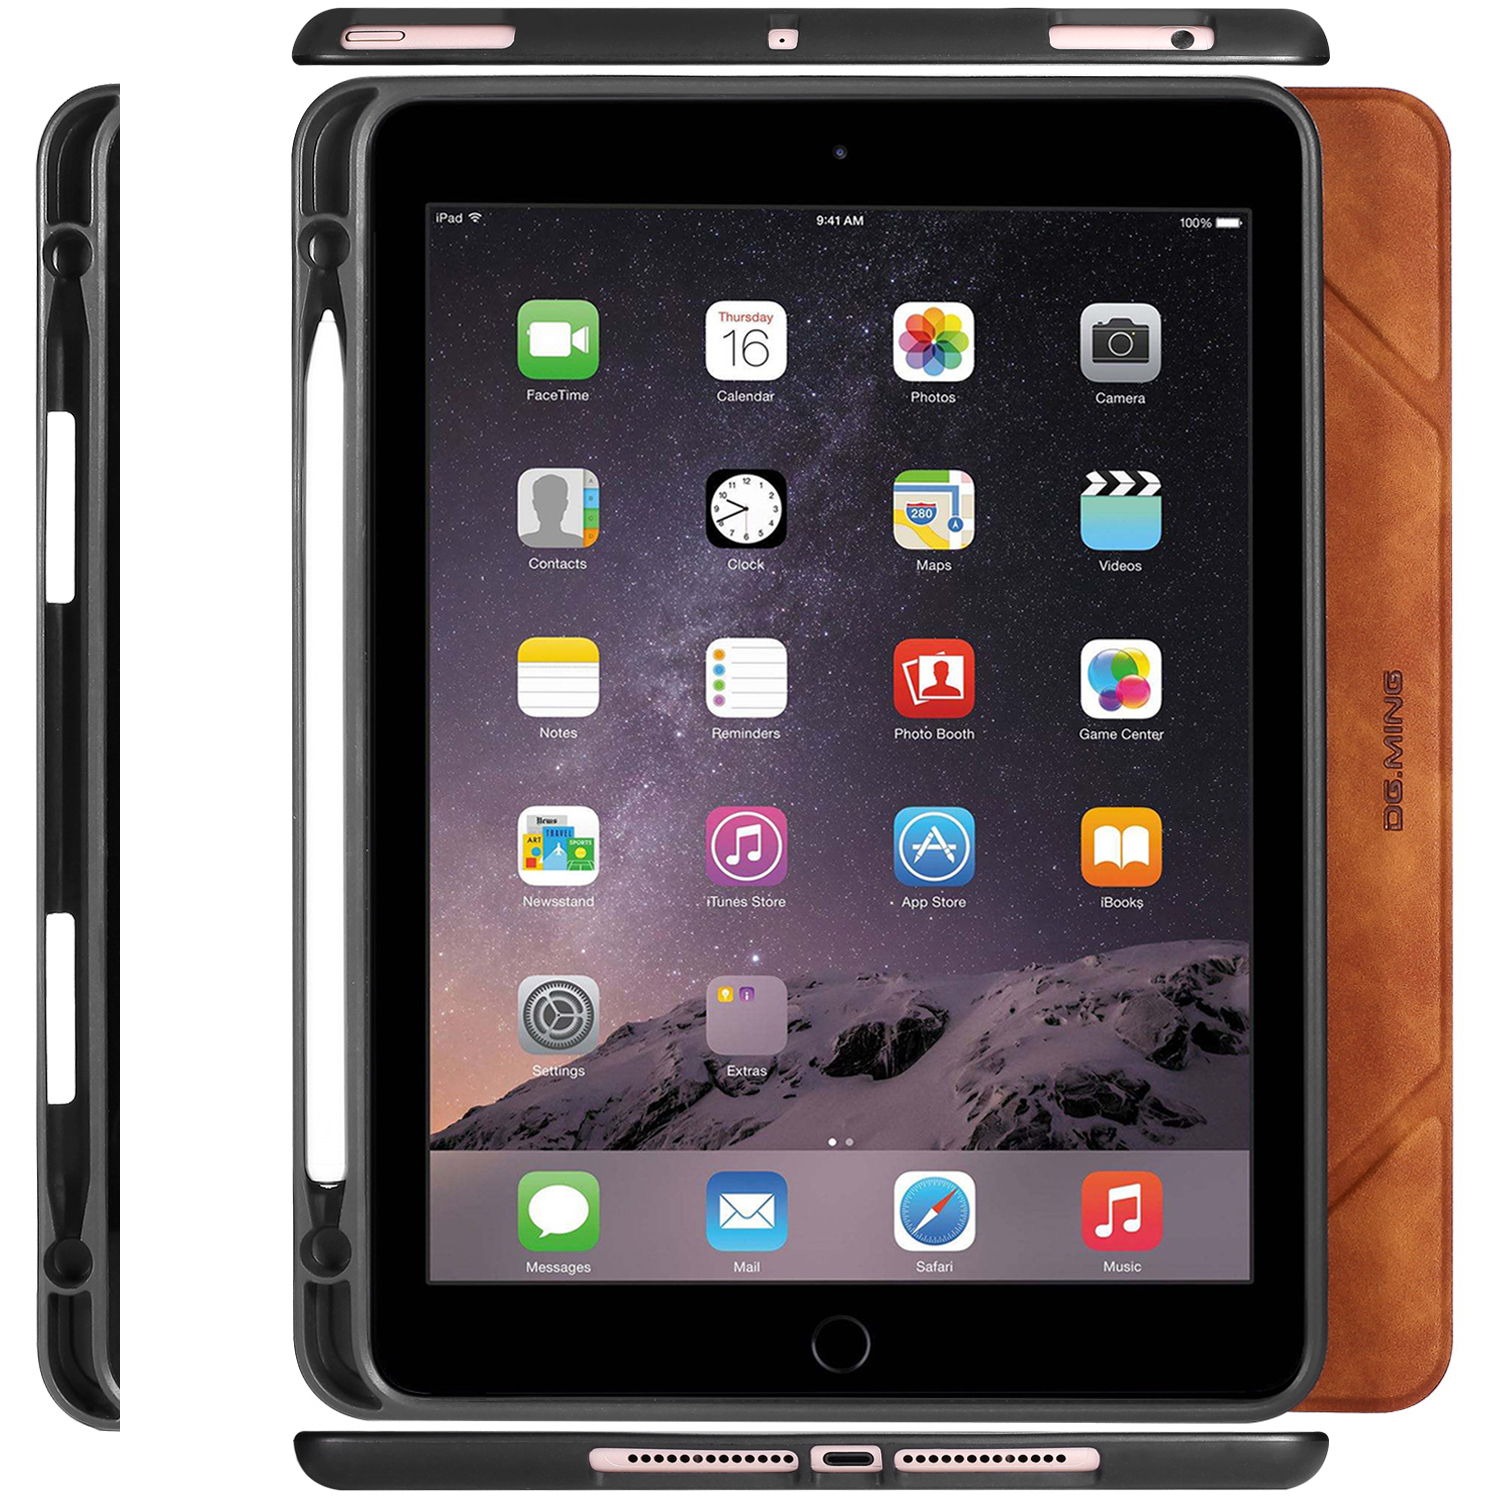 DG.MING Retro Style fodral till iPad Air/Air2 och iPad 9.7, brun